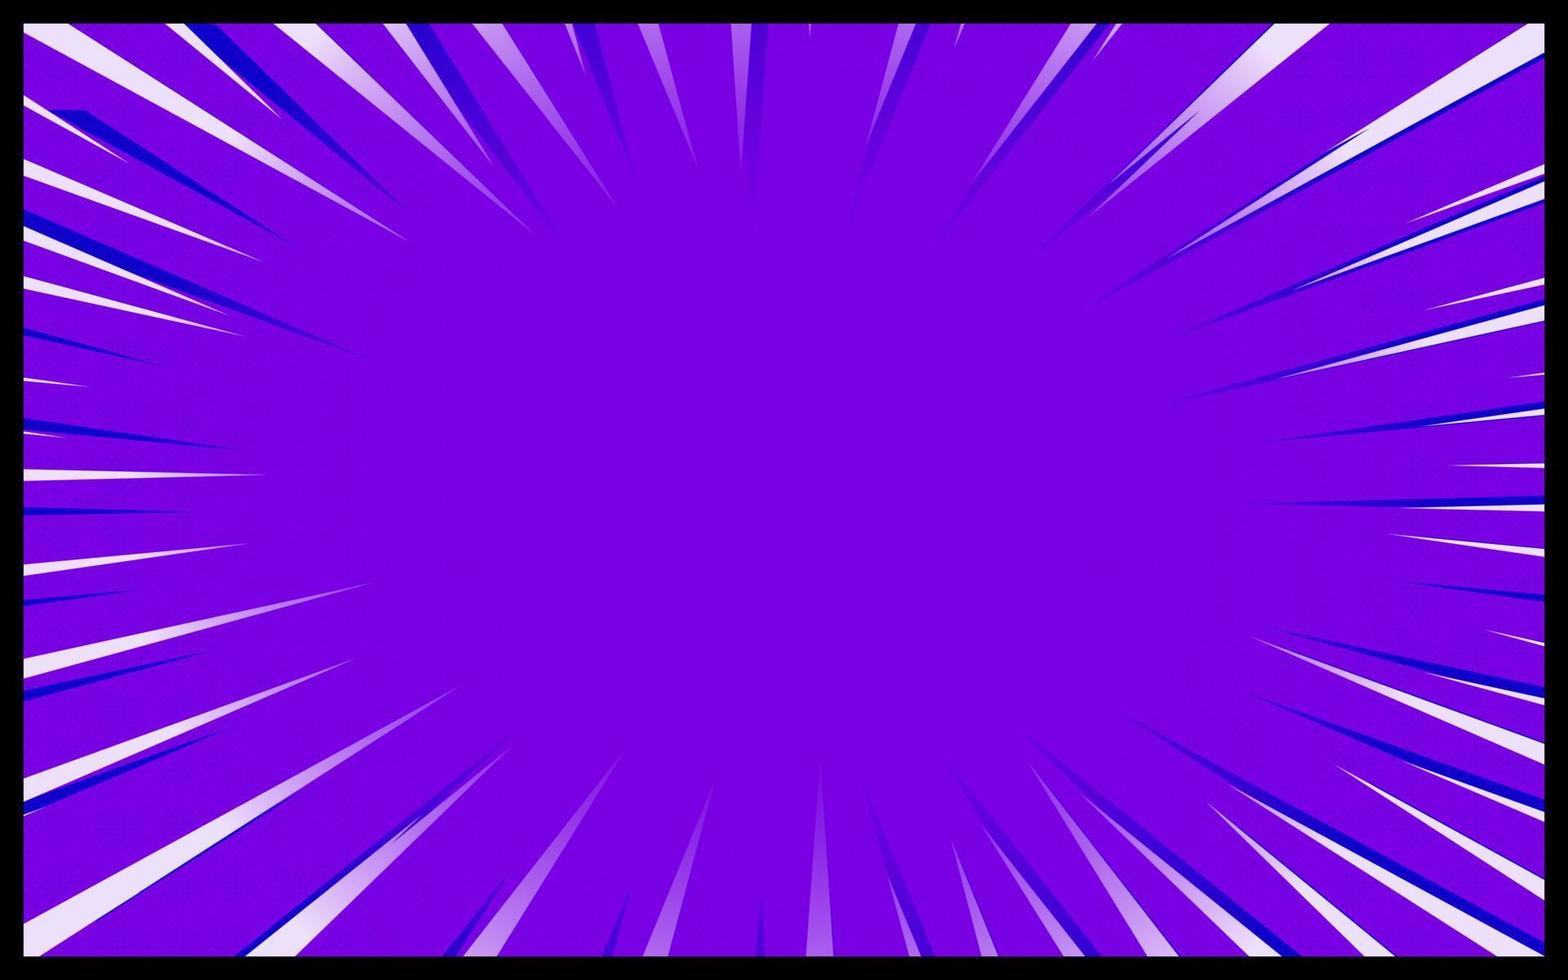 Purple comic background Retro vector